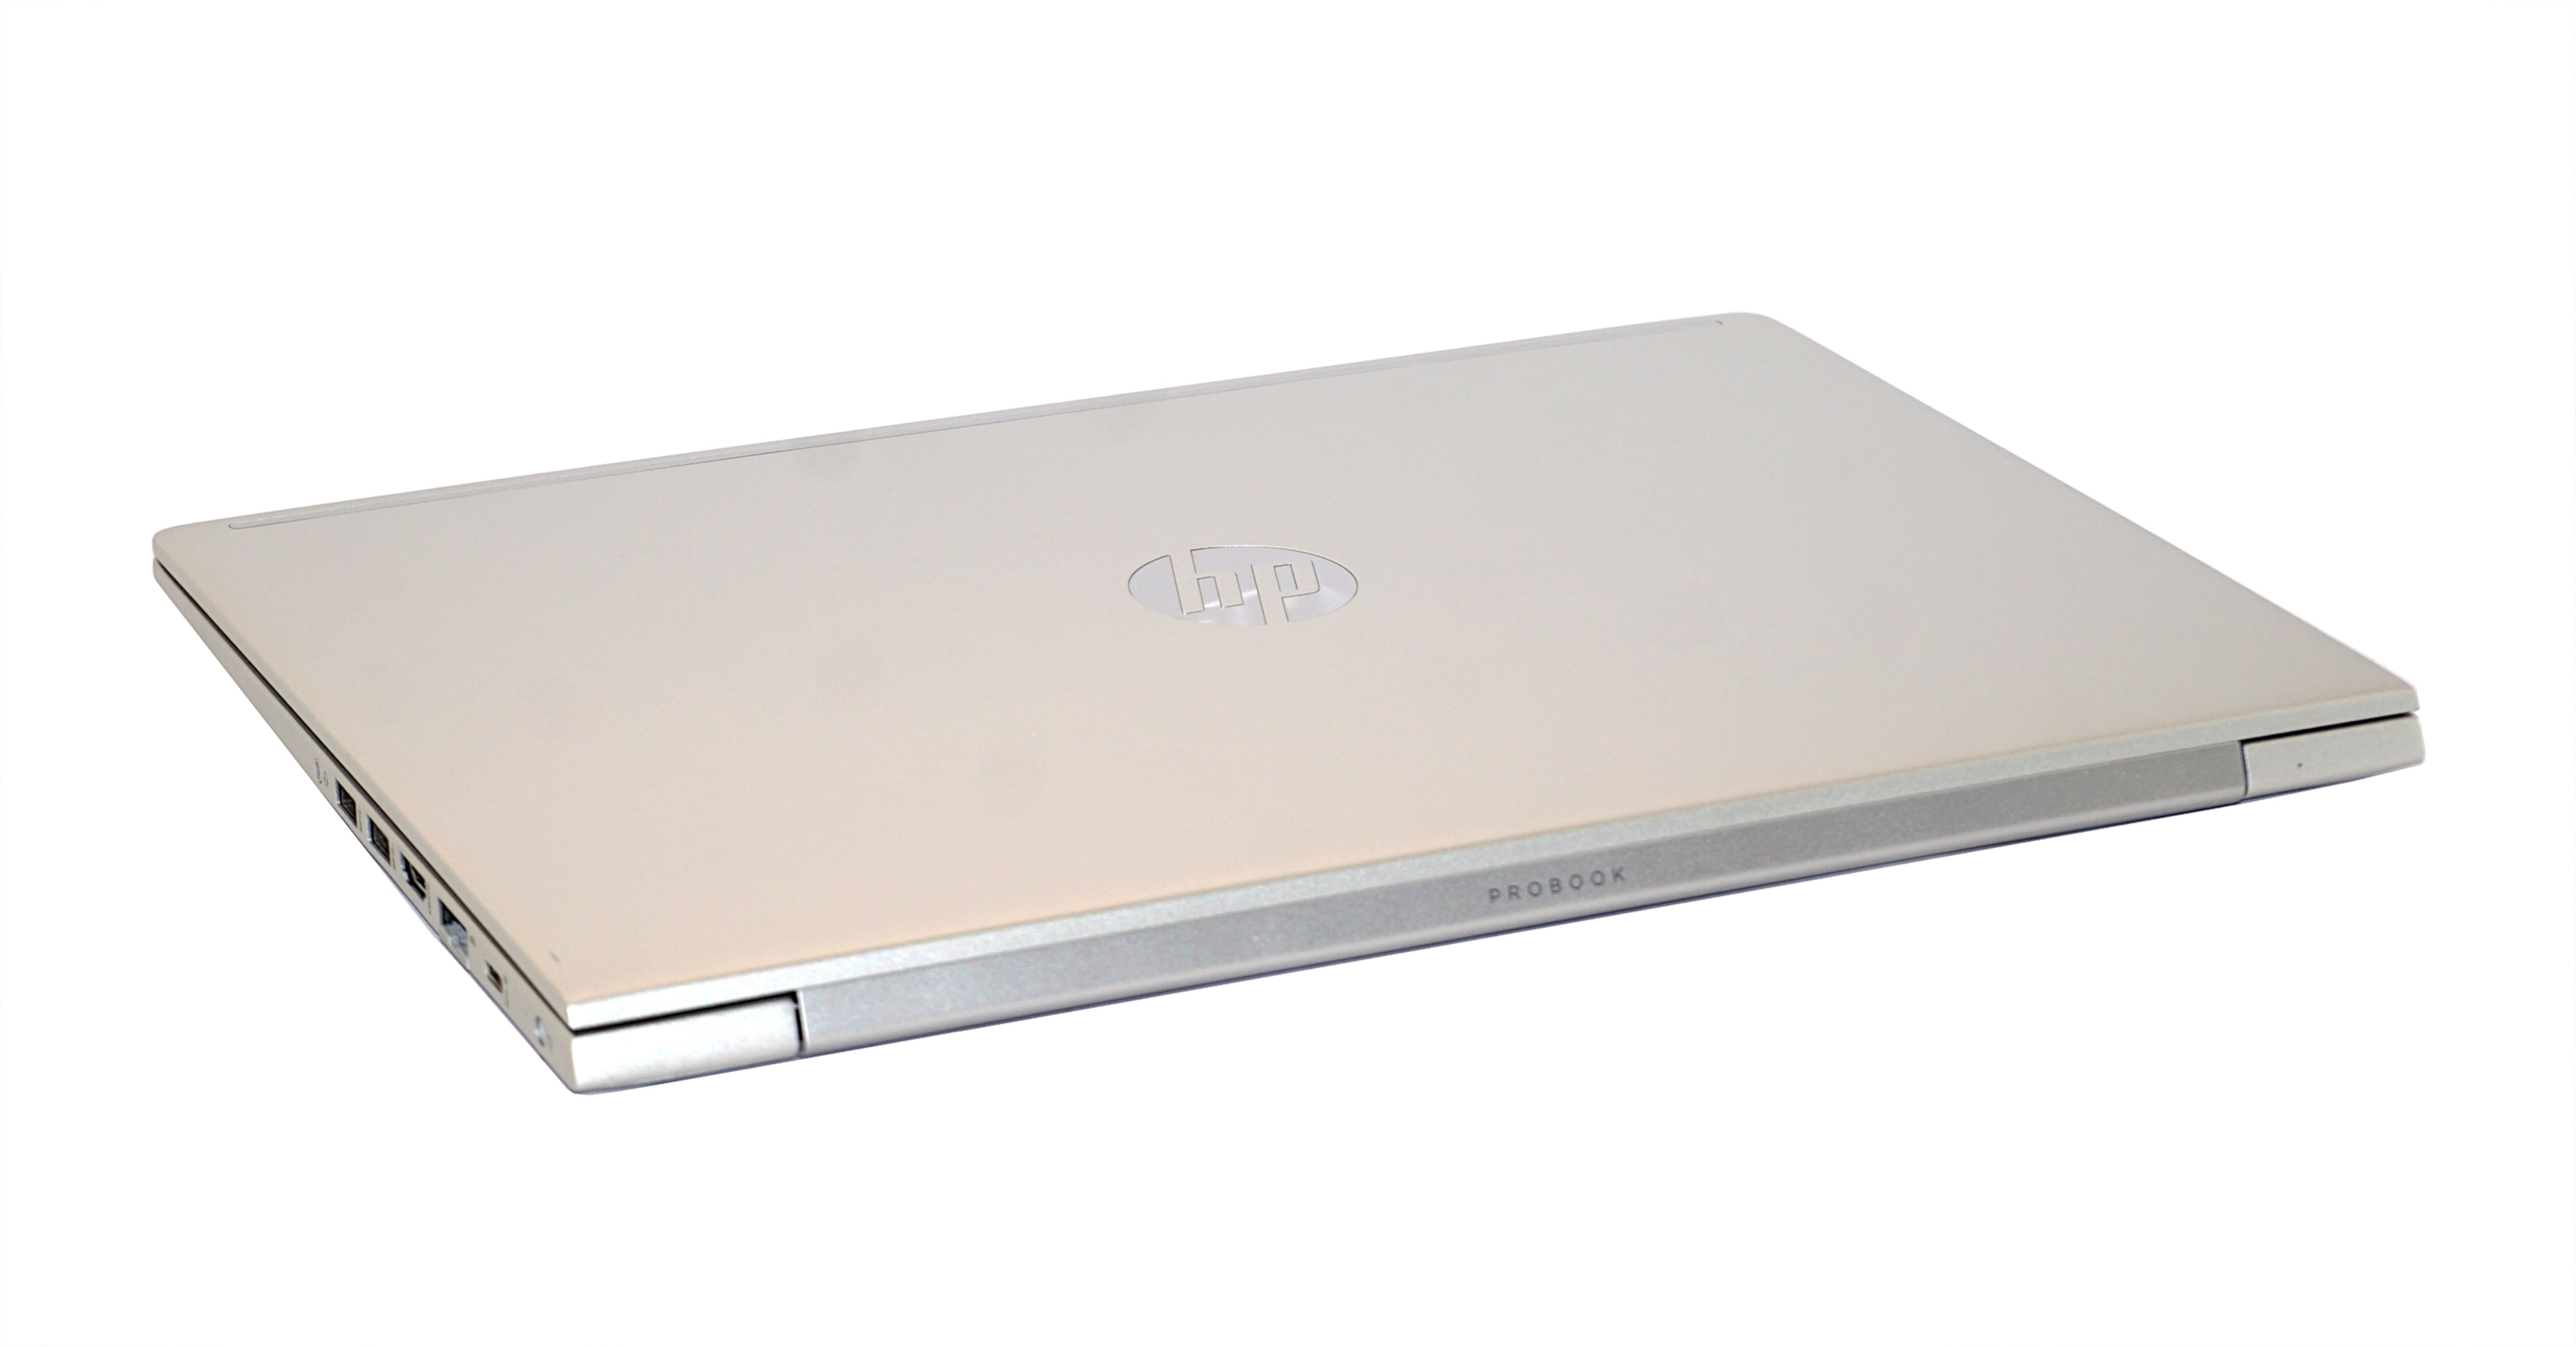 HP ProBook 455R G6 Laptop, 15.6" AMD Ryzen 5, 8GB RAM, 256GB SSD